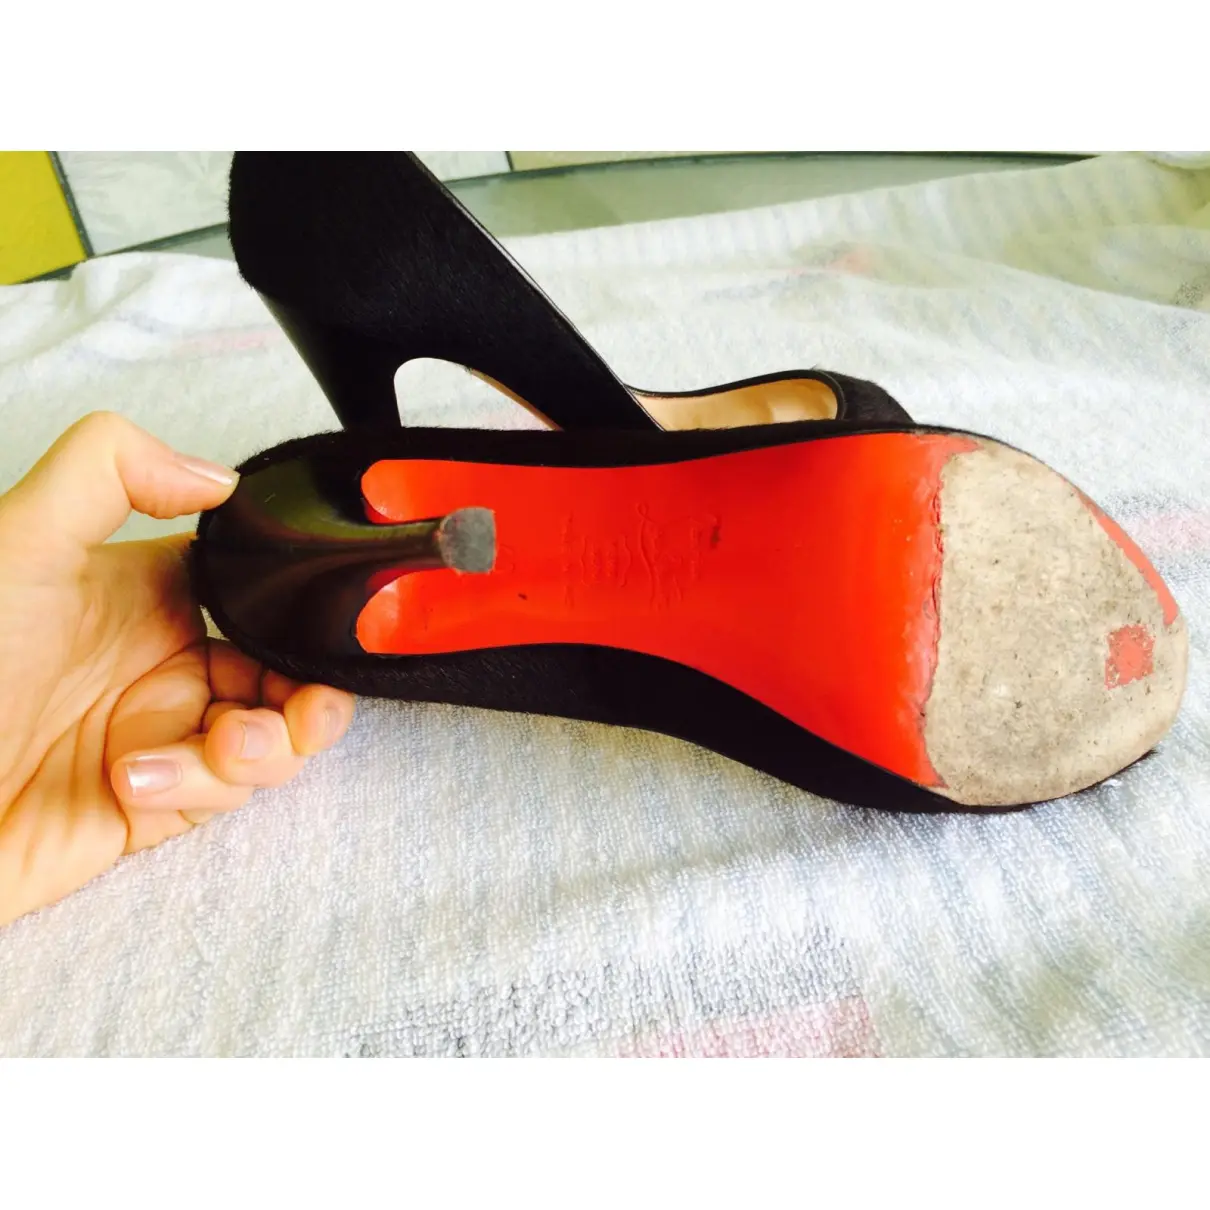 Buy Christian Louboutin Pony-style calfskin heels online